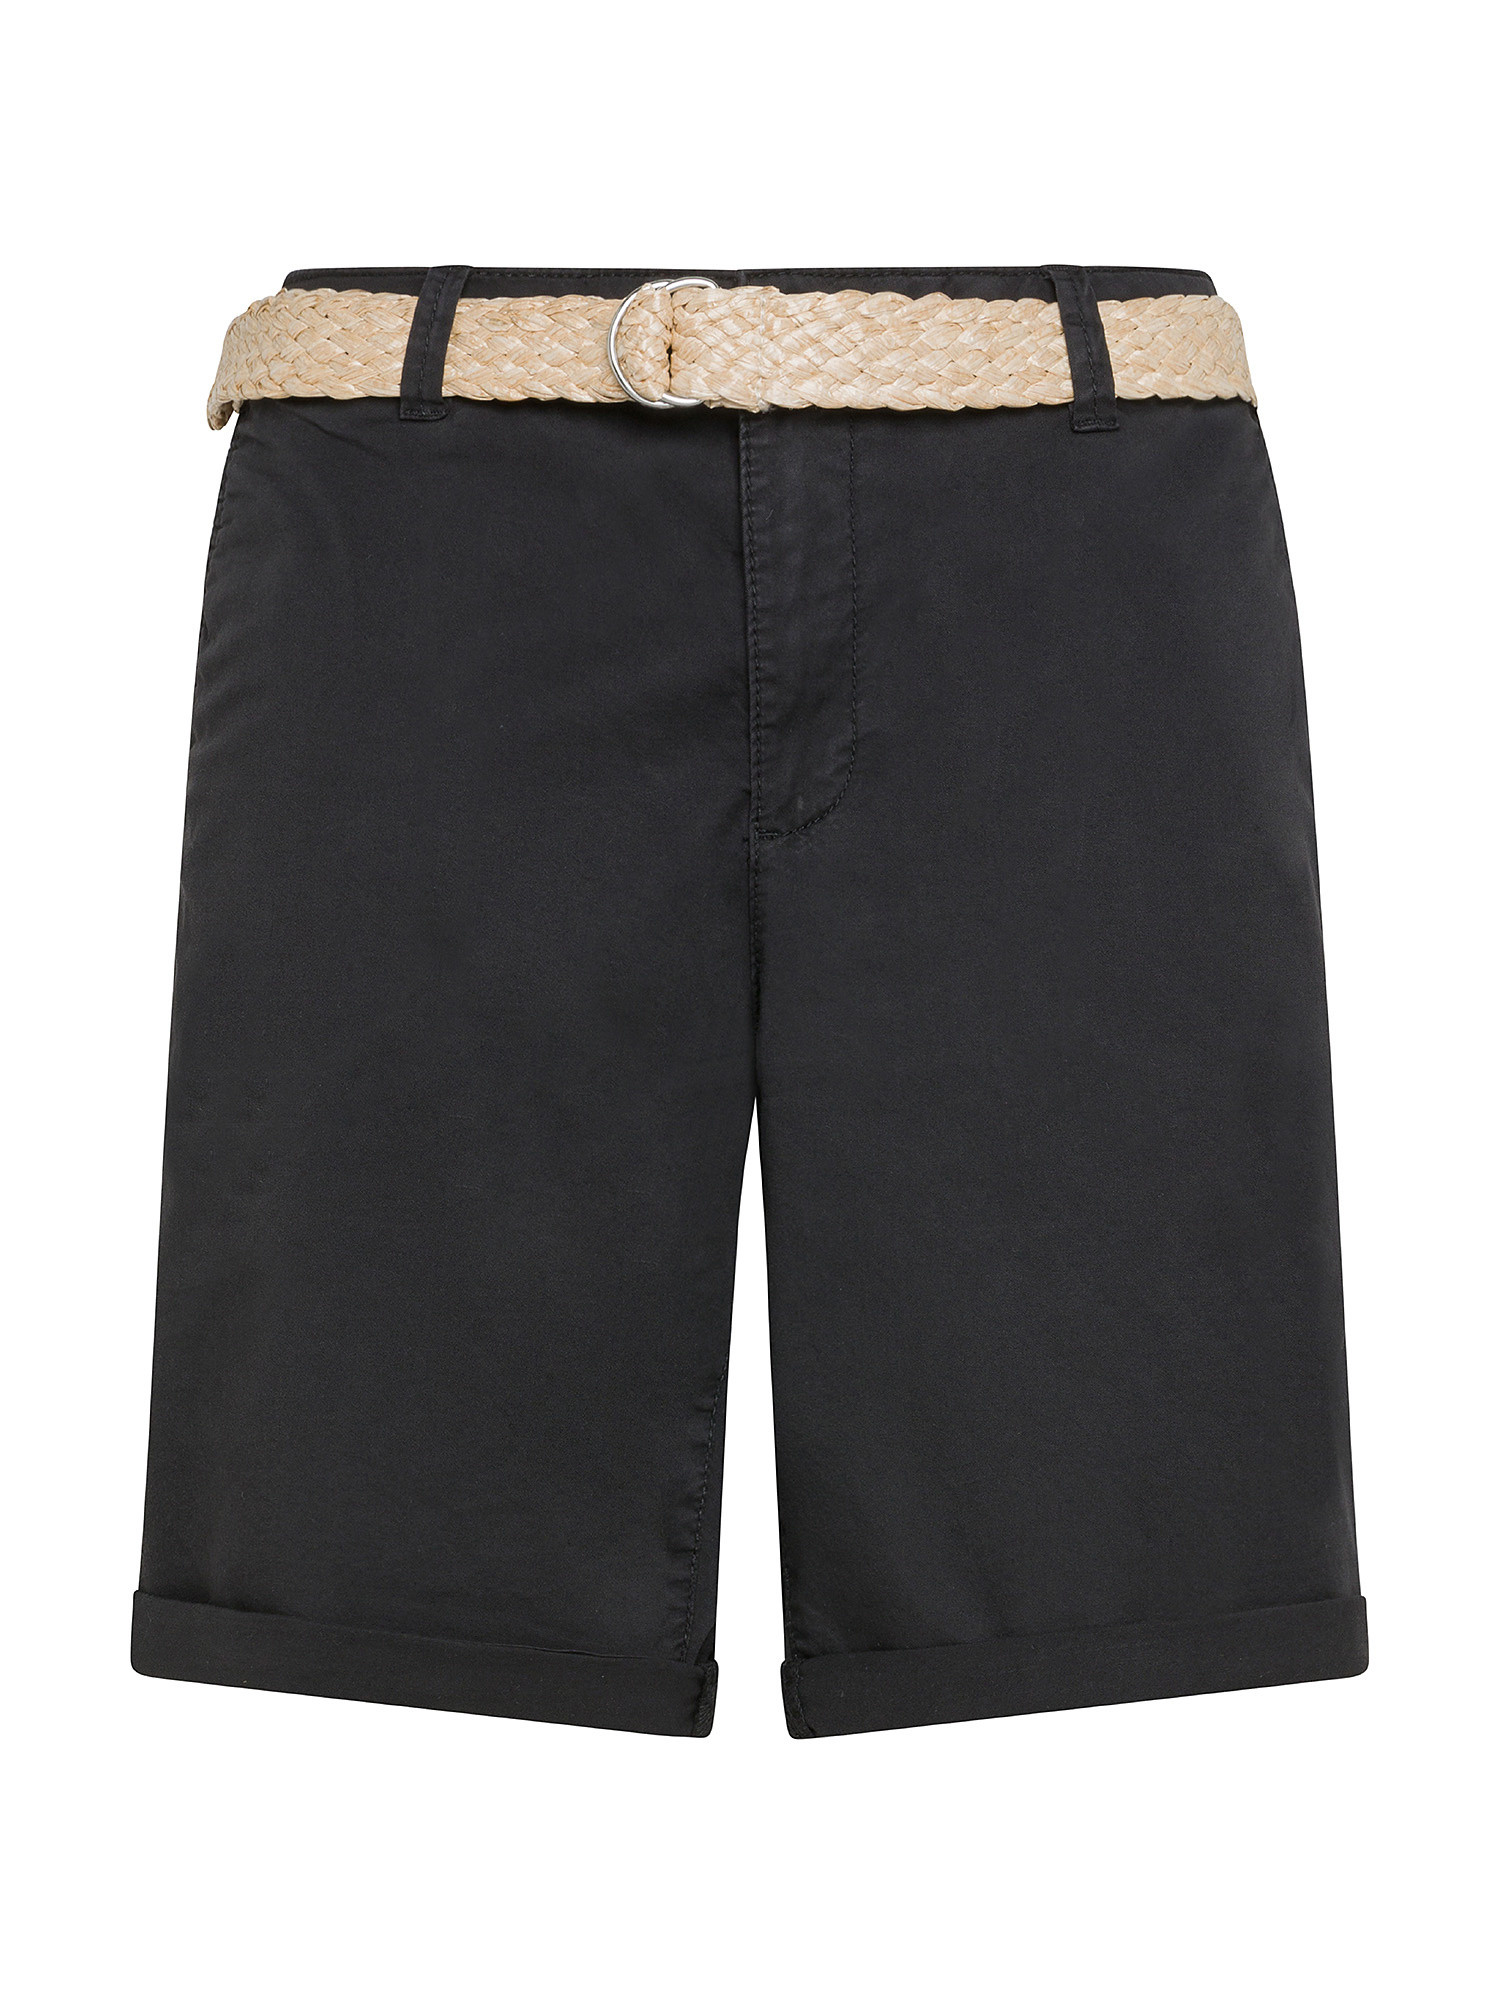 Esprit - Shorts con cintura intrecciata in rafia, Nero, large image number 0